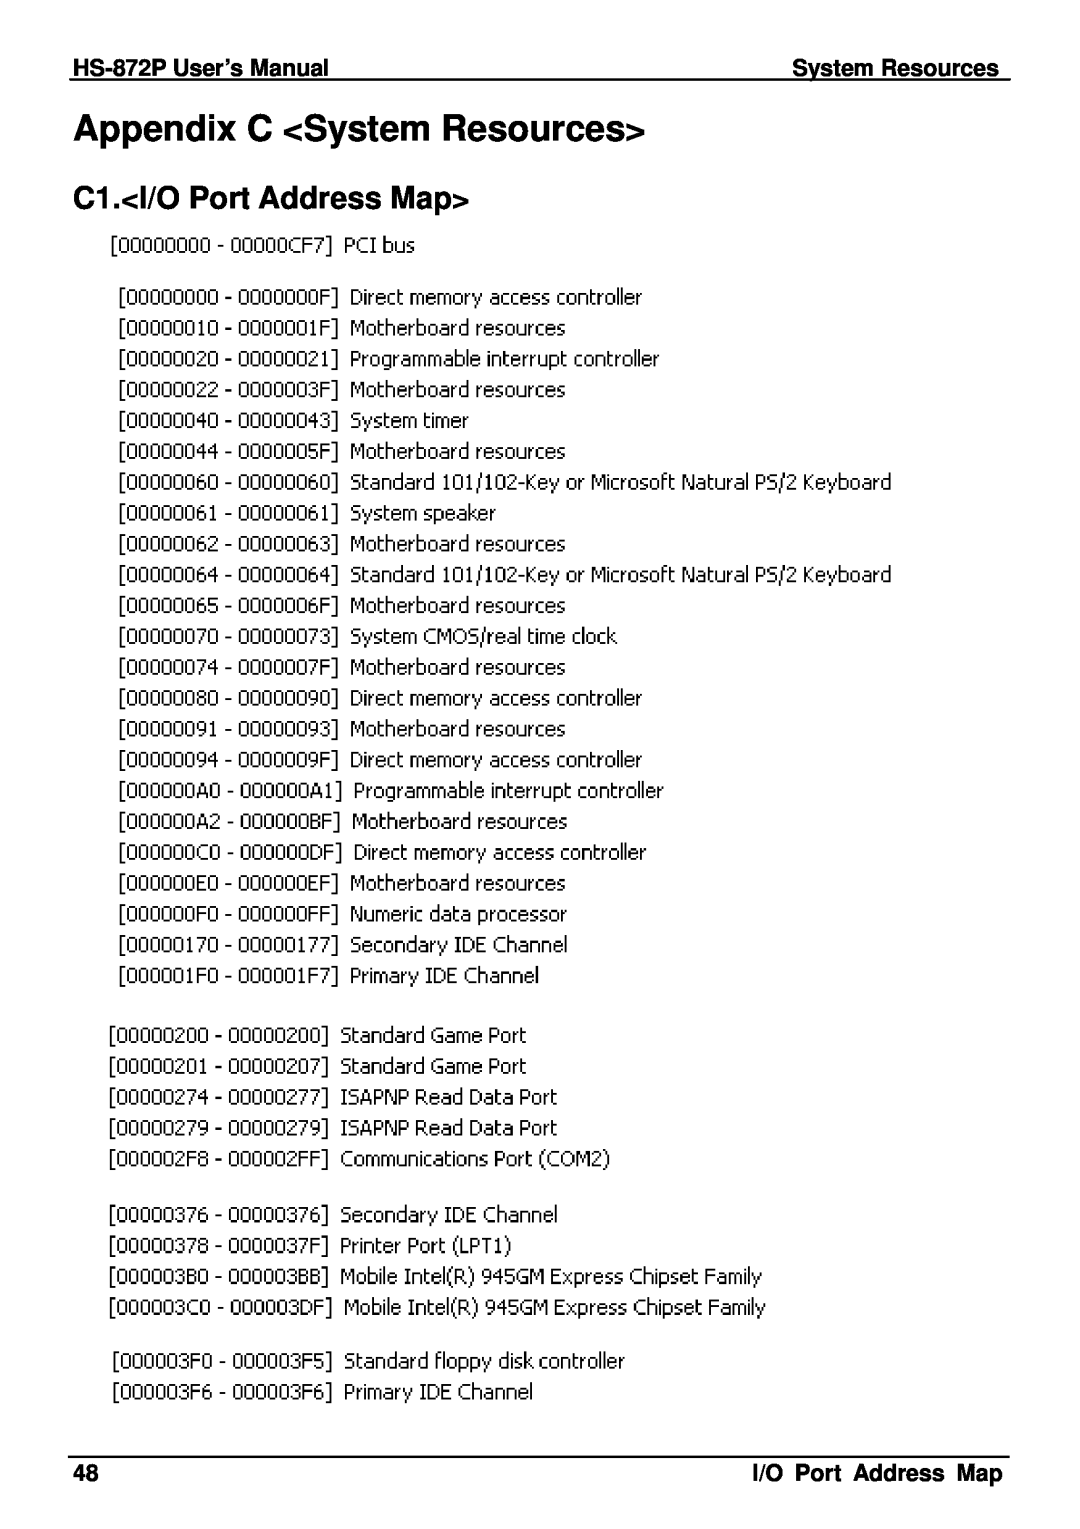 Intel HS-872P, half-size single board computer user manual Appendix C System Resources, C1.I/O Port Address Map 